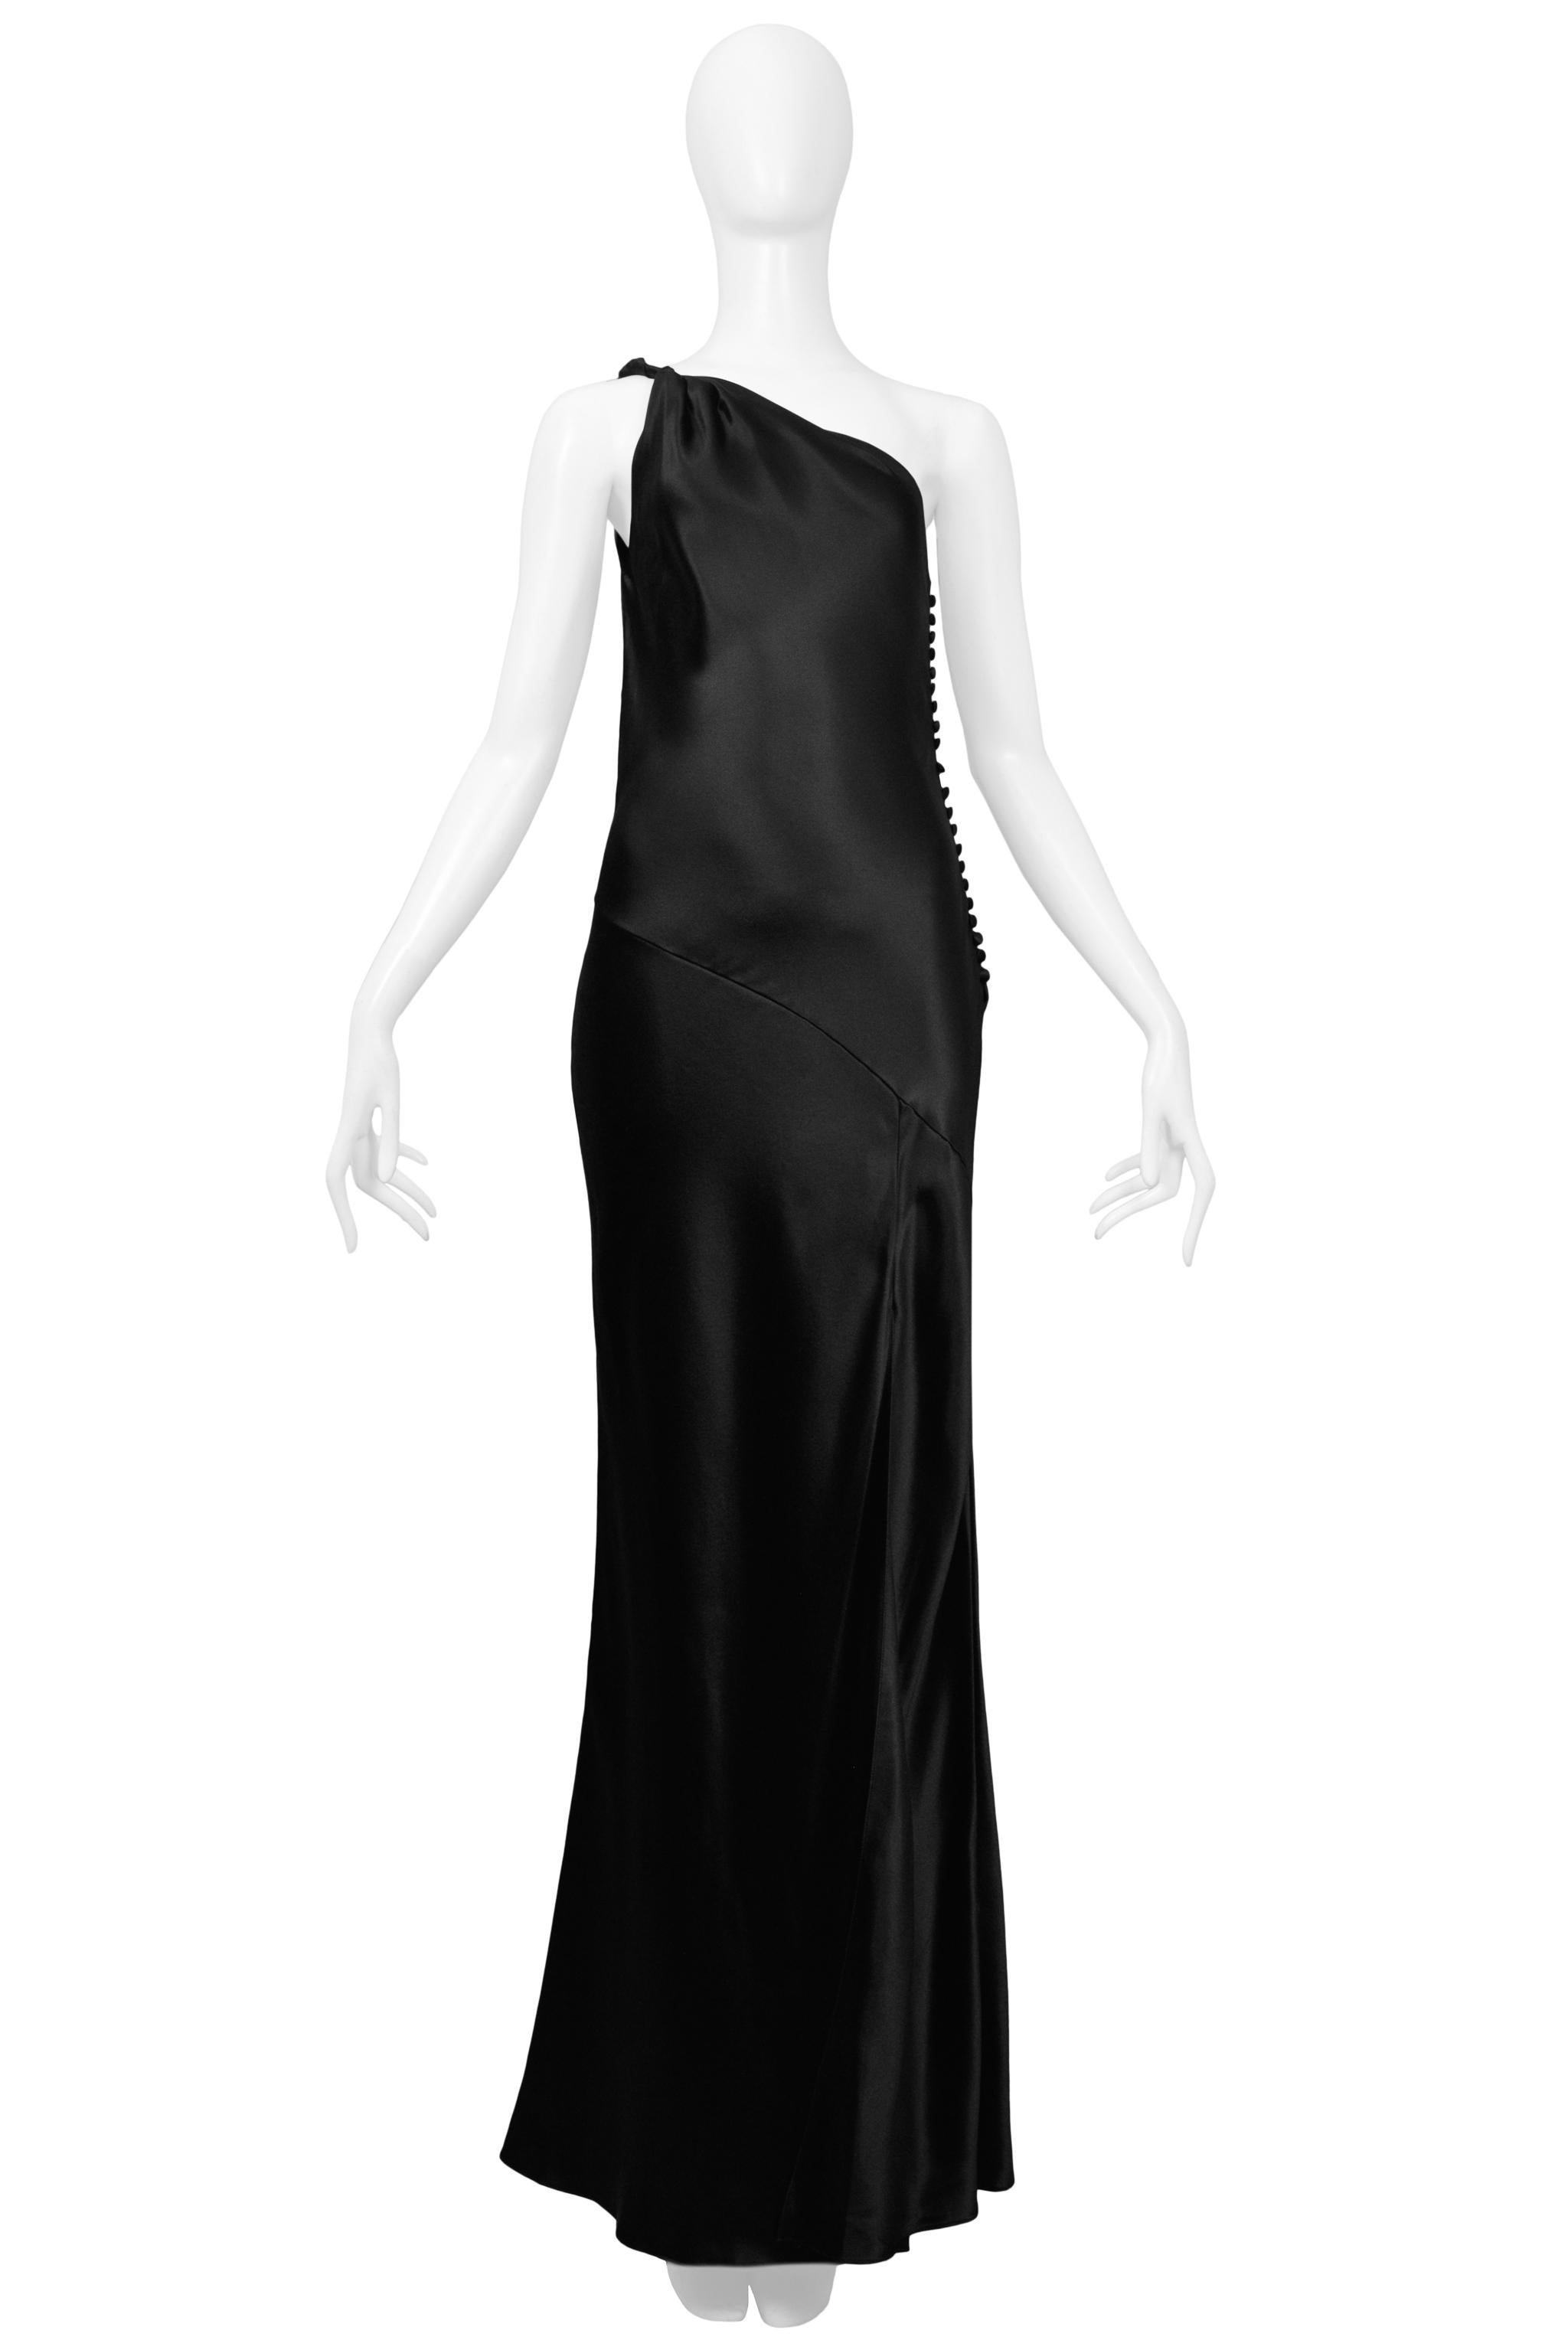 Black Vintage Christian Dior by John Galliano Satin Asymmetrical Gown 2001